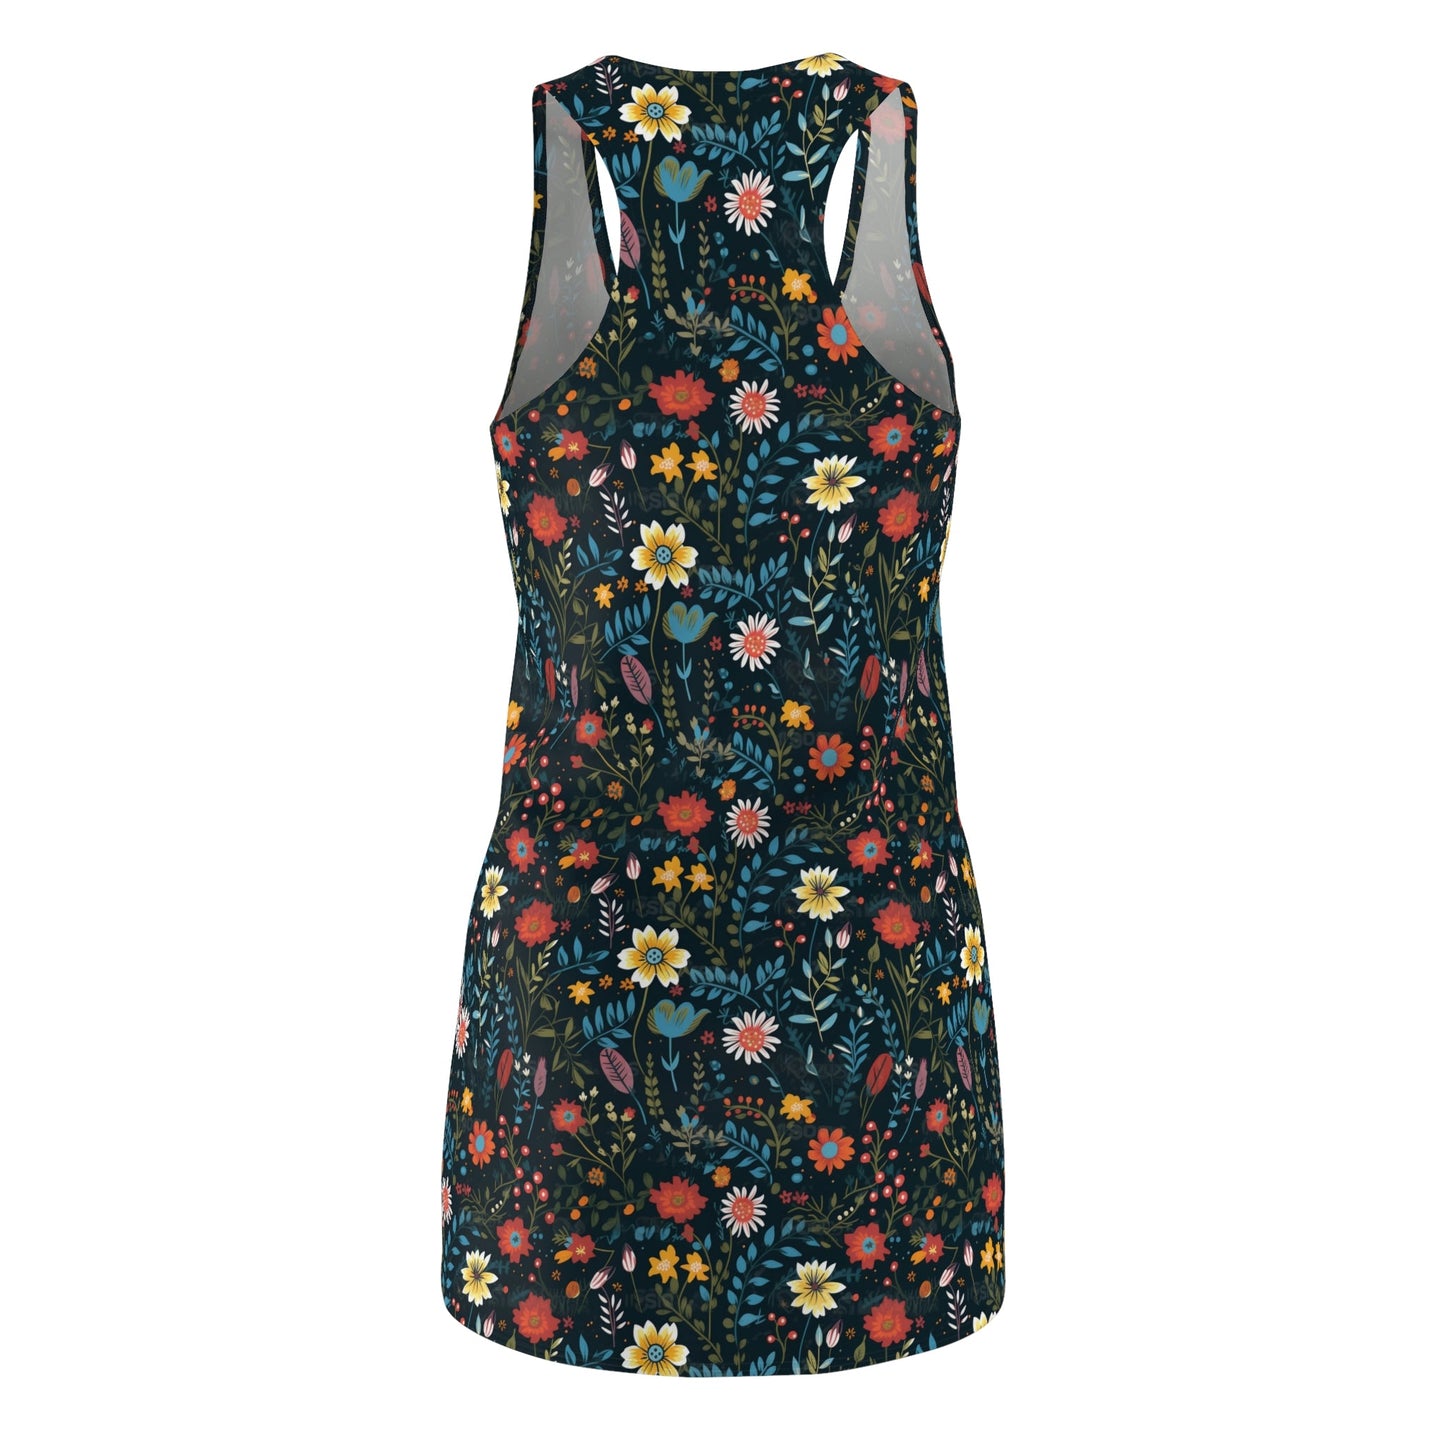 Pressed Wildflowers on Black Background Pattern Floral Women's Racerback Dress